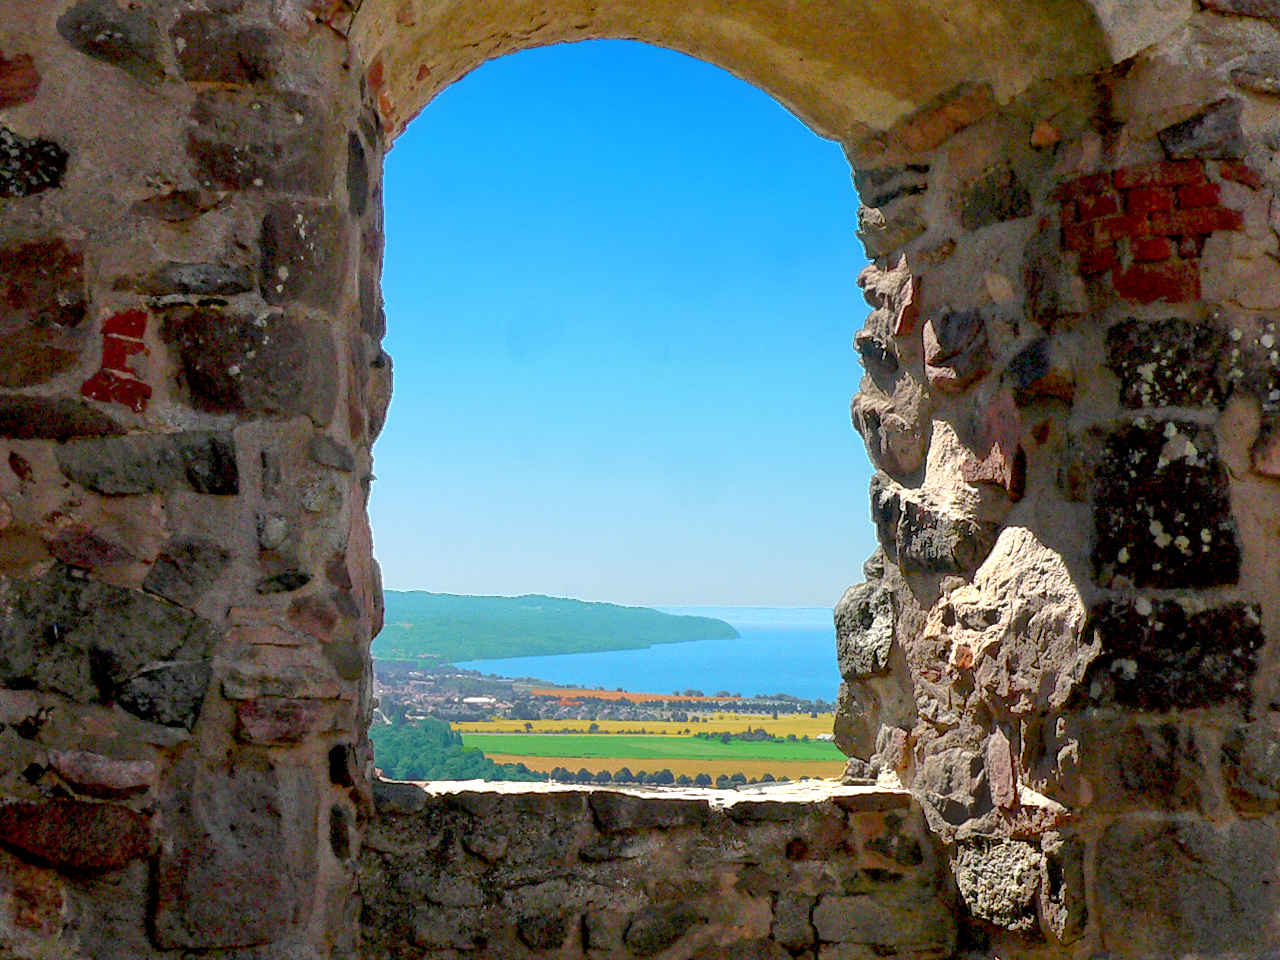 Sweden - Scenery through Window in old Castle